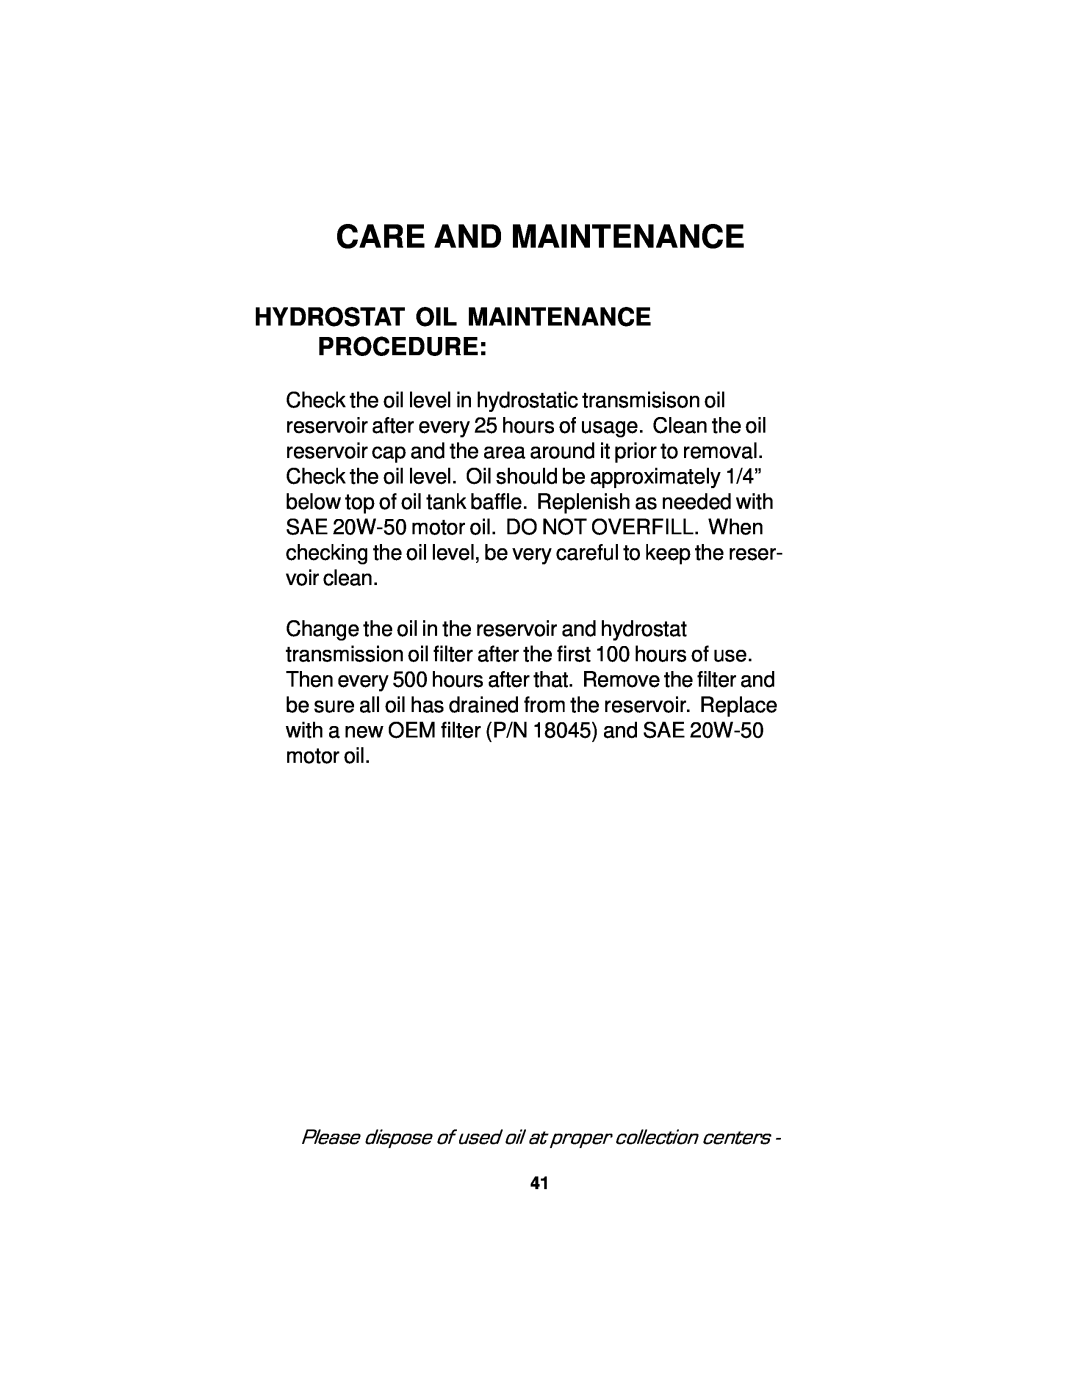 Dixon 18124-0804 manual Hydrostat Oil Maintenance Procedure, Care And Maintenance 